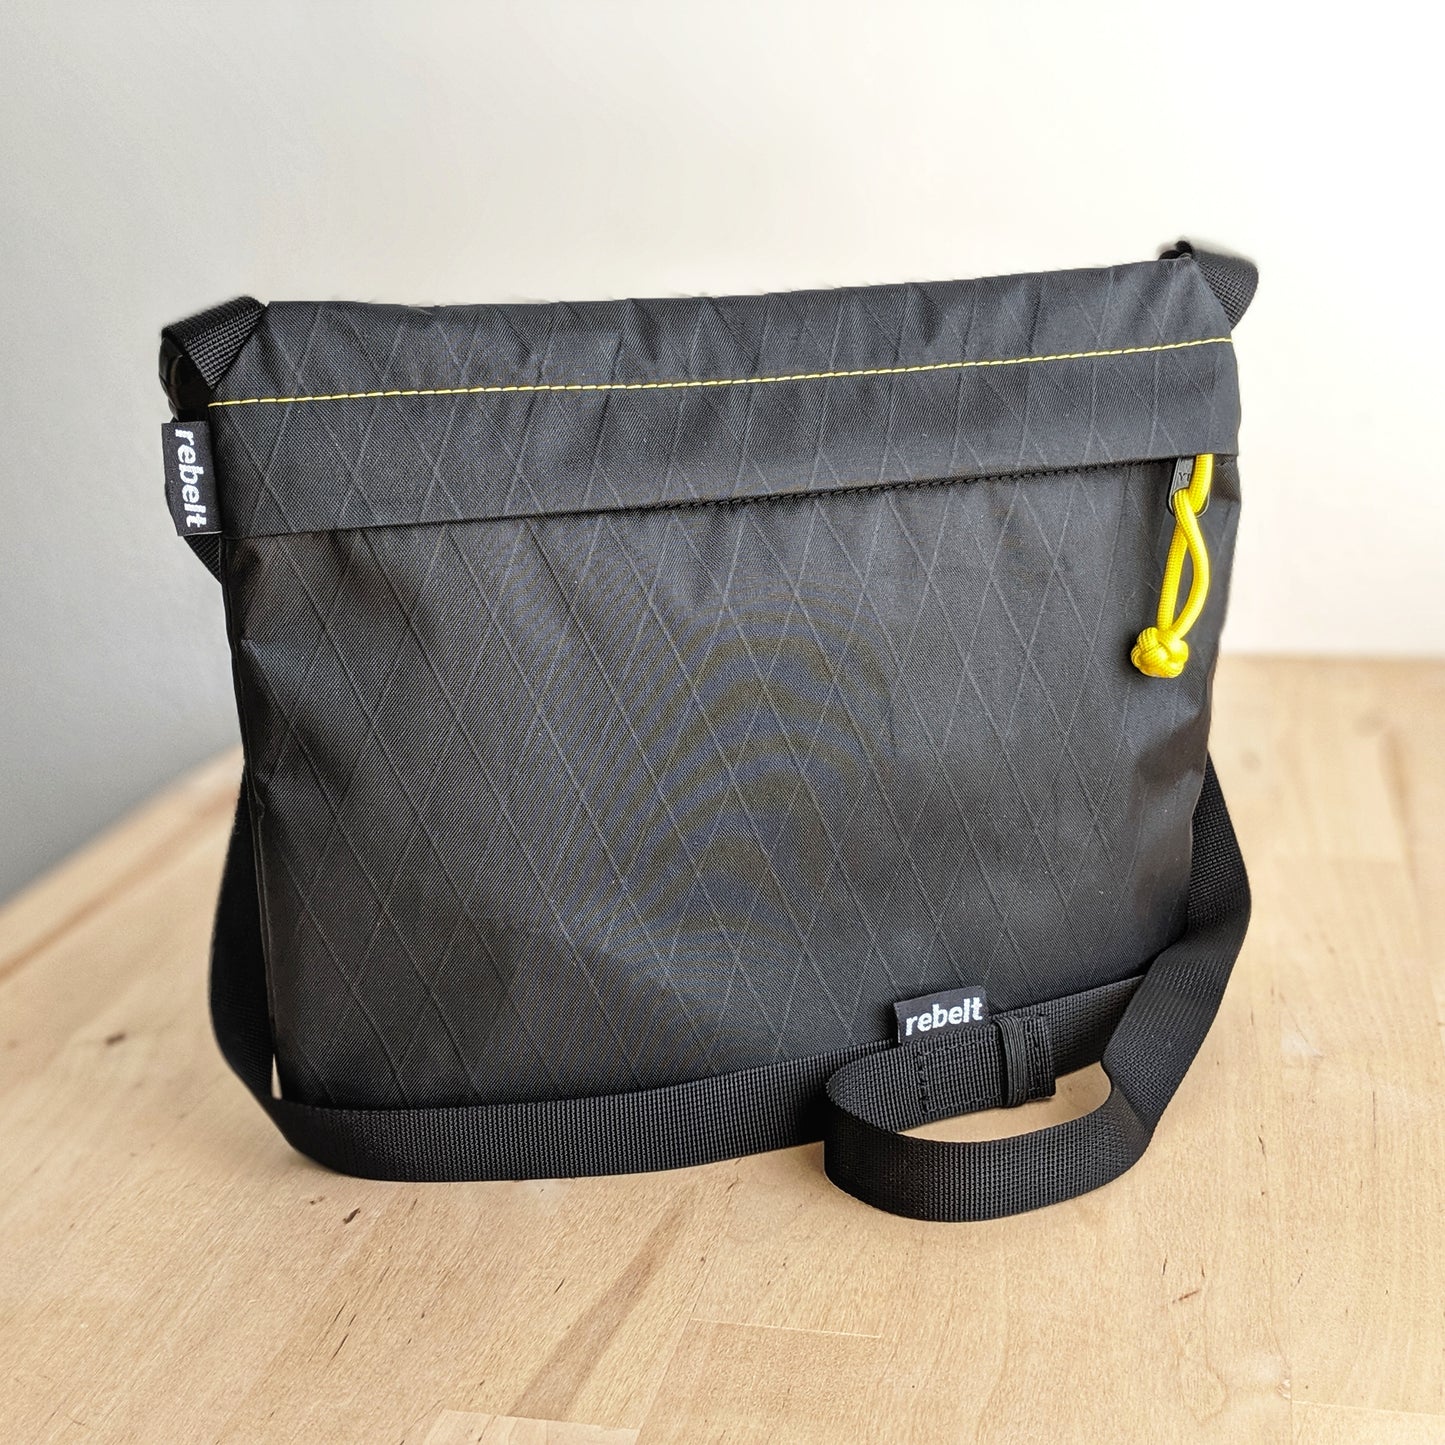 Trip - a minimalist hand bag